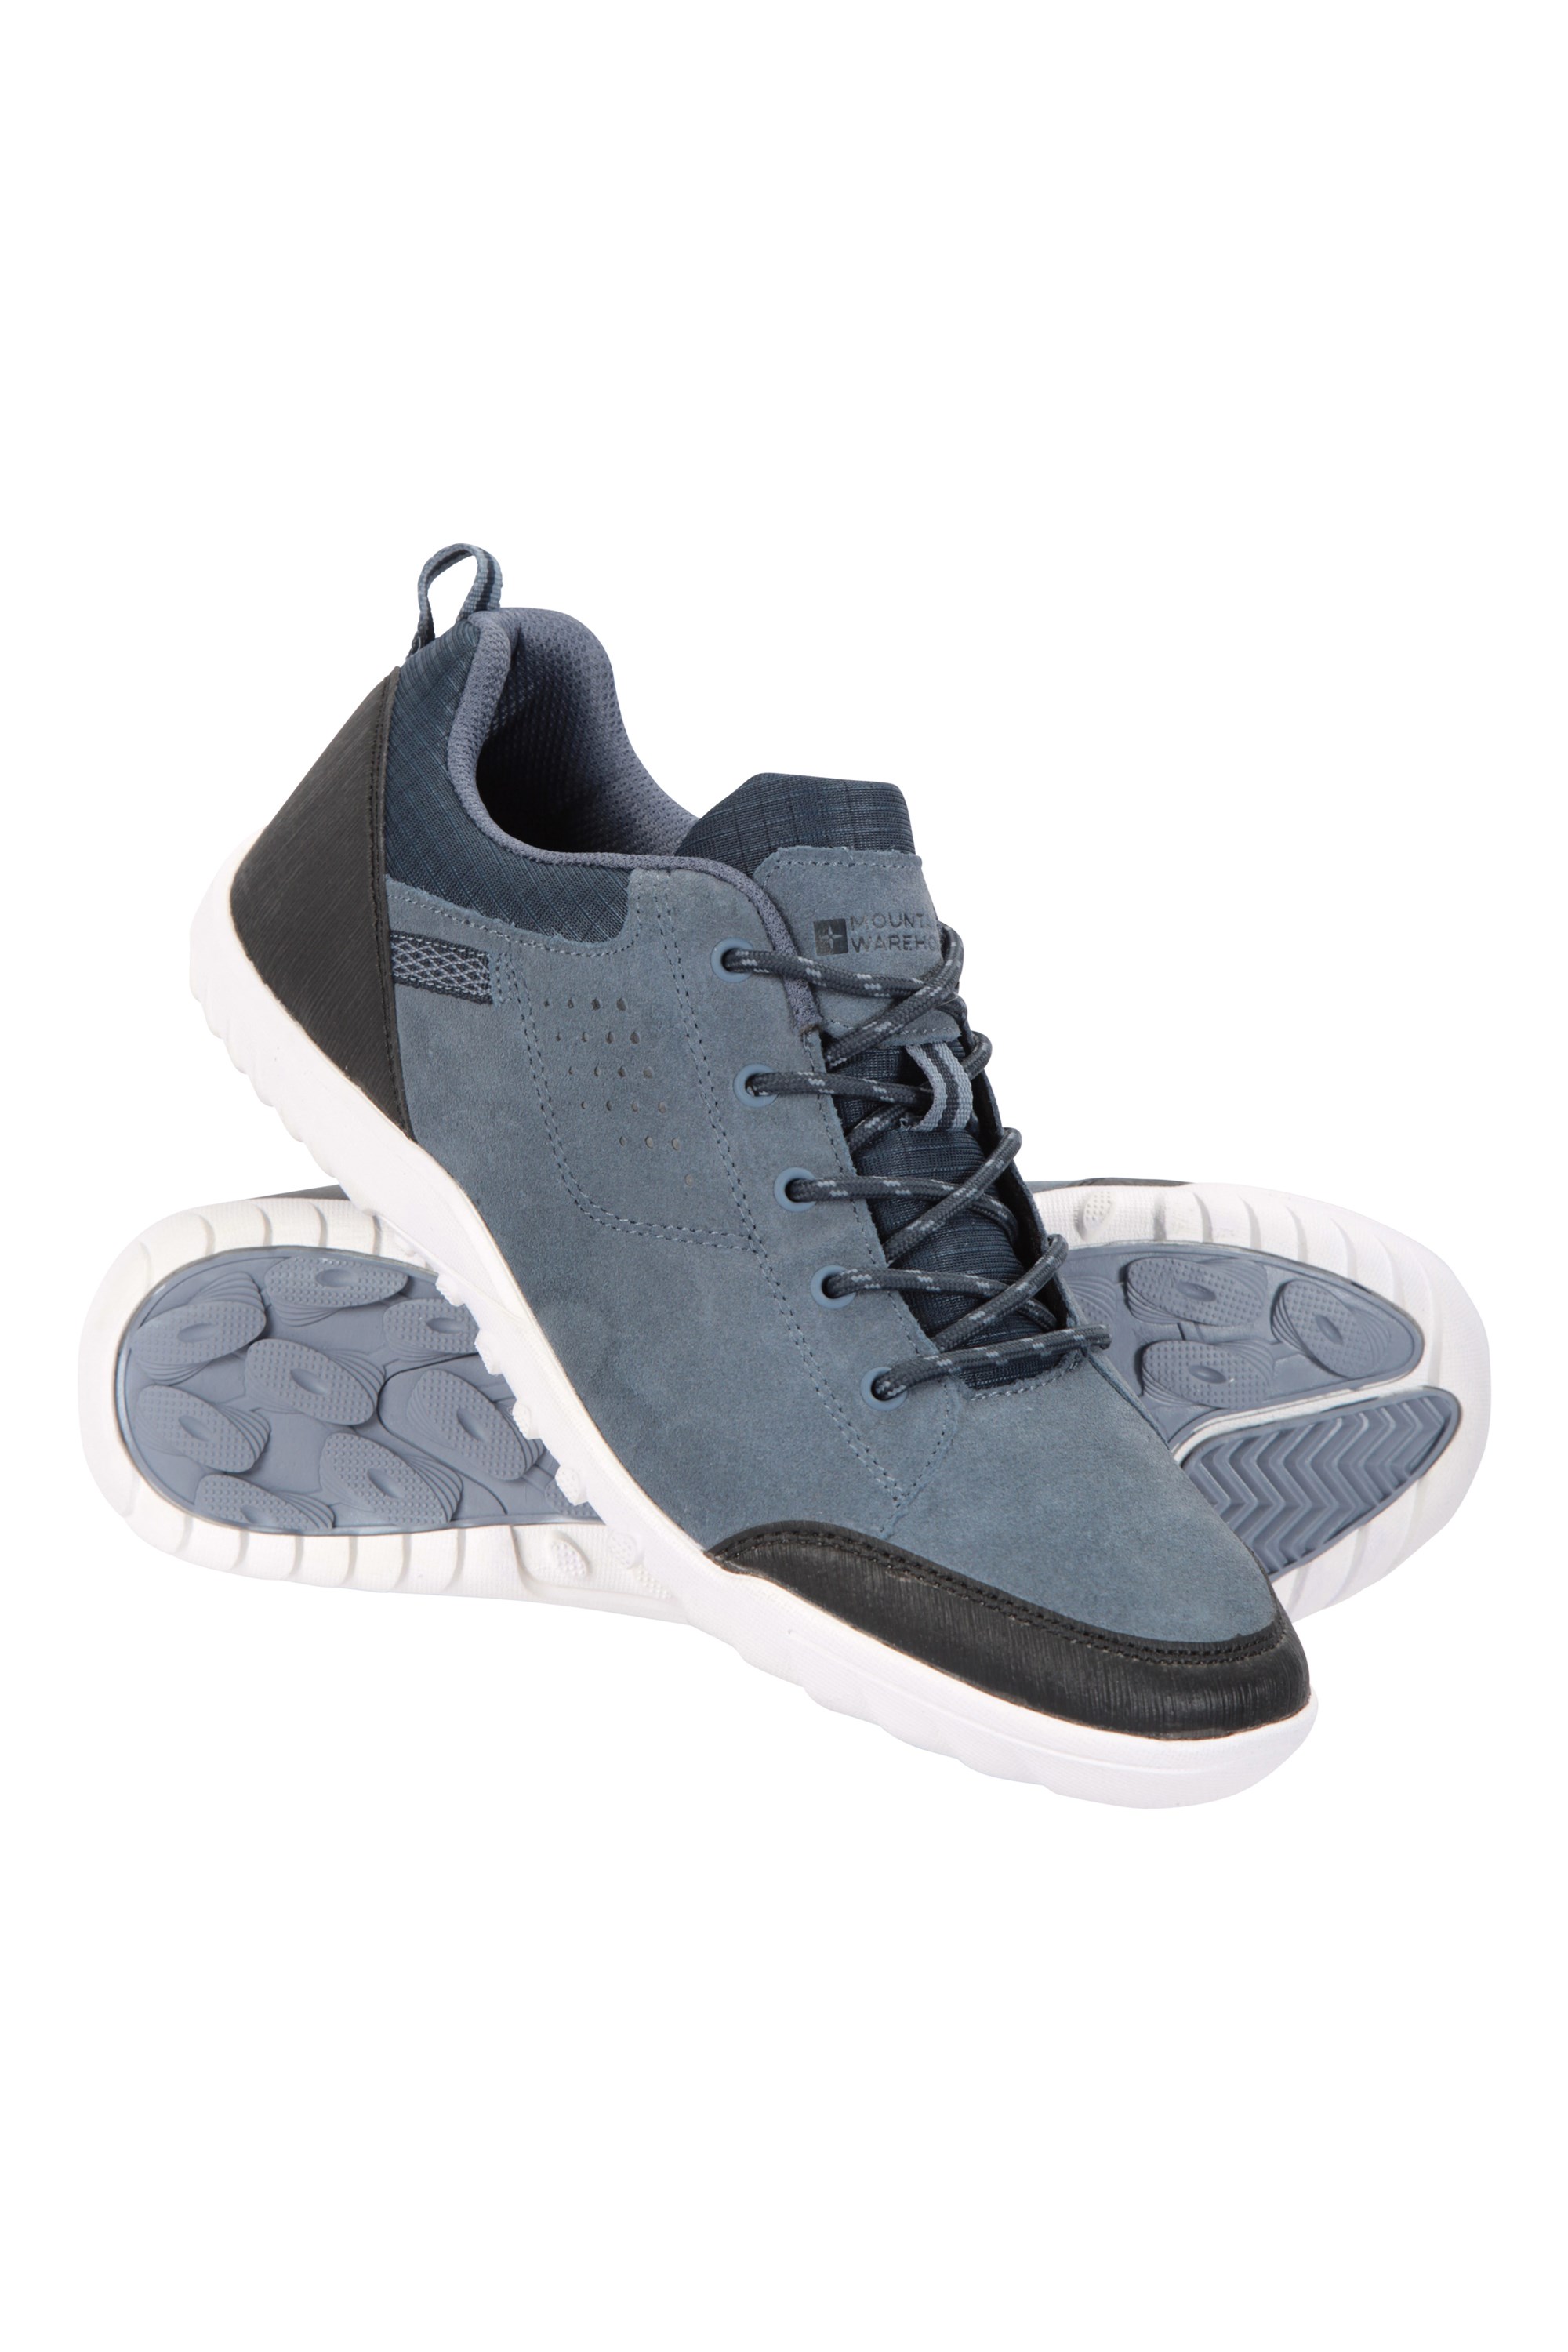 Mens Hiking Shoes & Walking Shoes | Mountain Warehouse US